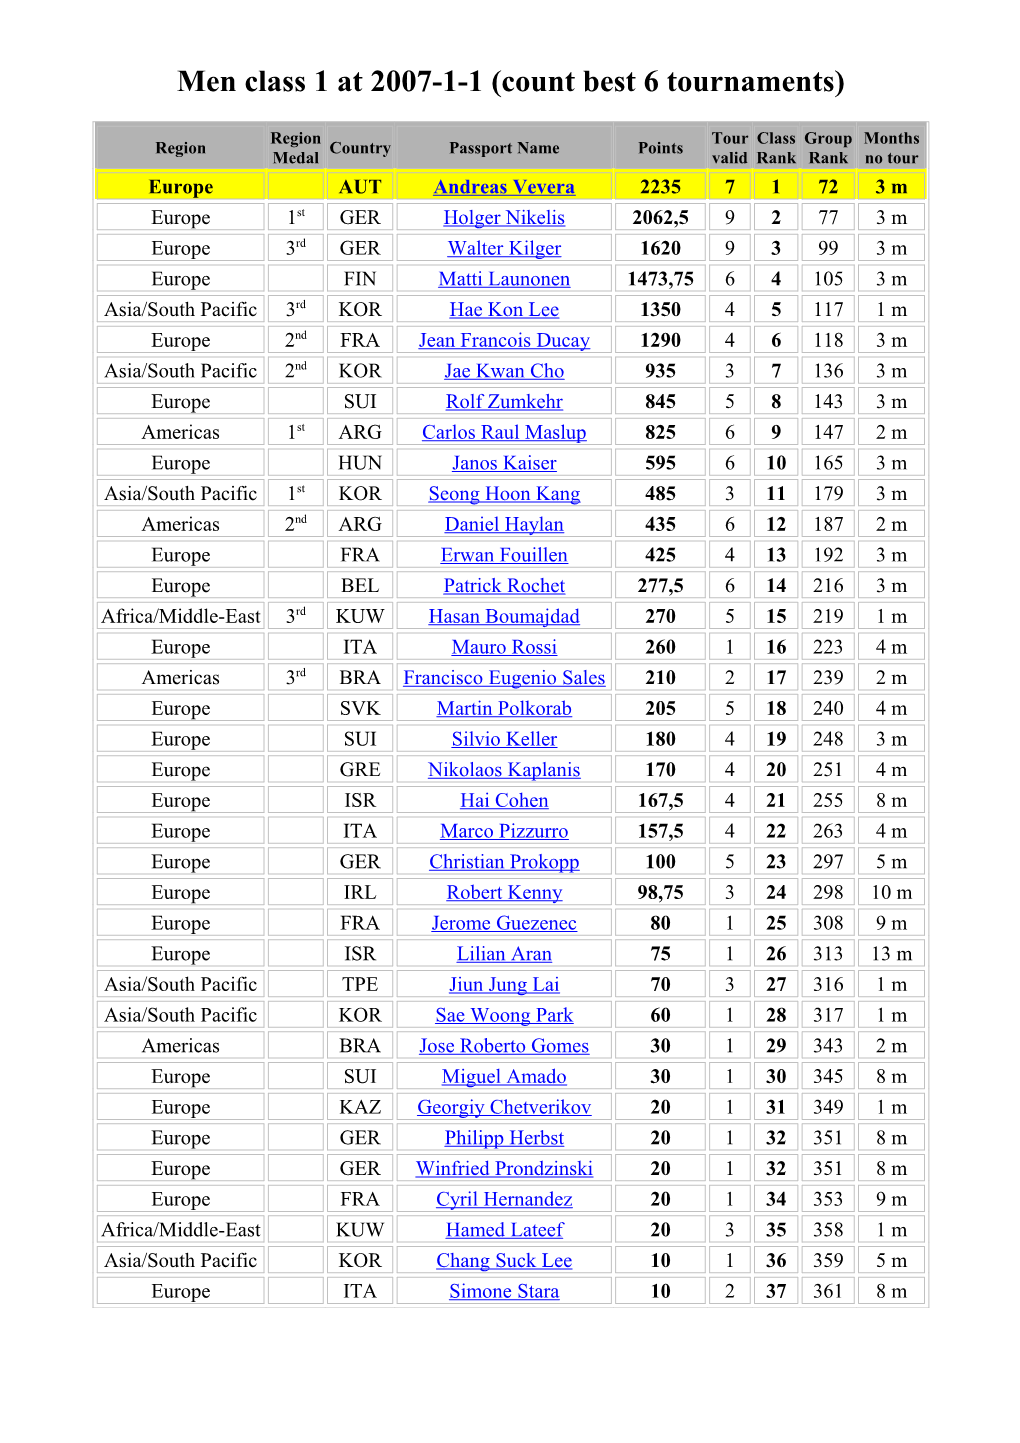 Men Class 1 at 2007-1-1 (Count Best 6 Tournaments)